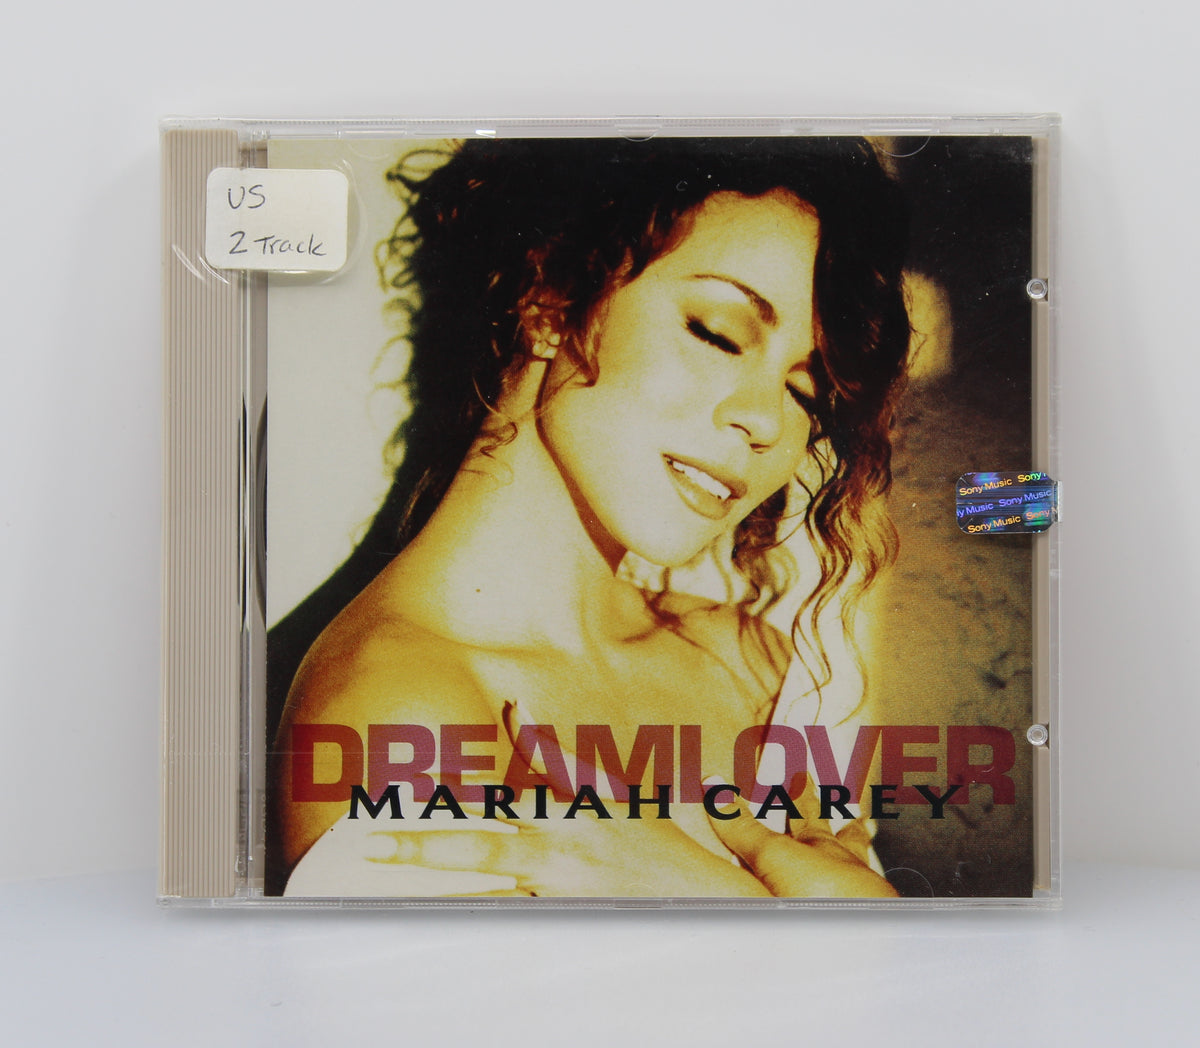 Mariah Carey – Dreamlover, CD Single, US 1993